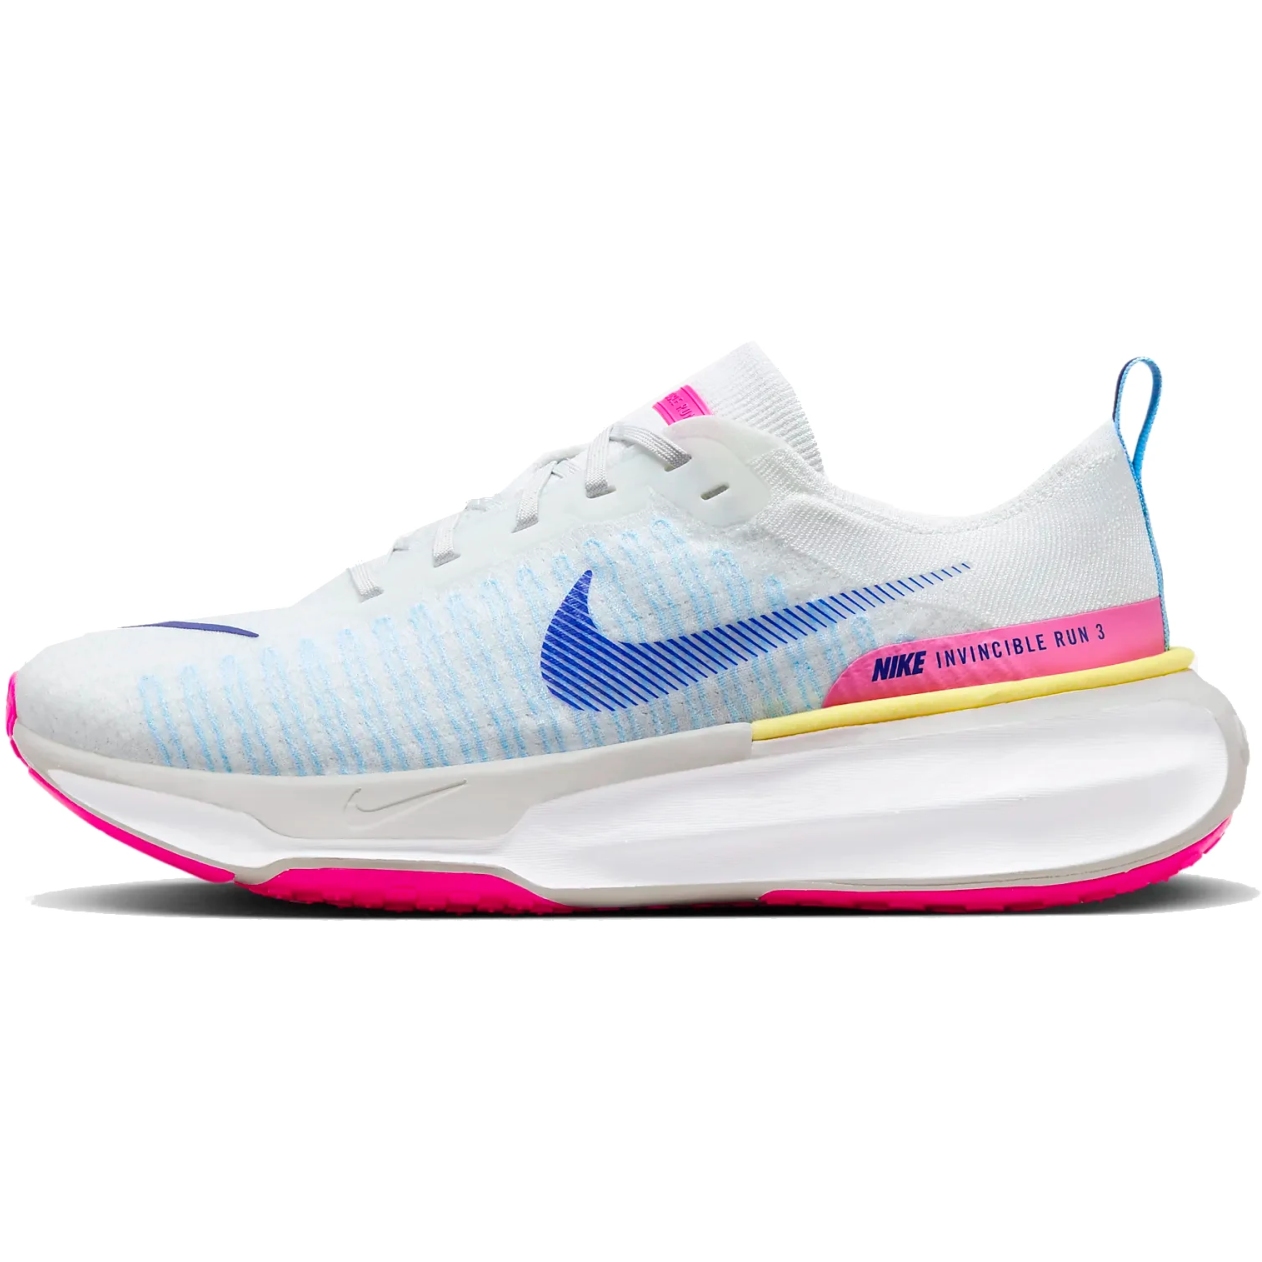 Productfoto van Nike Invincible 3 Hardloopschoenen Heren - white/photon dust/fierce pink/deep royal blue DR2615-105